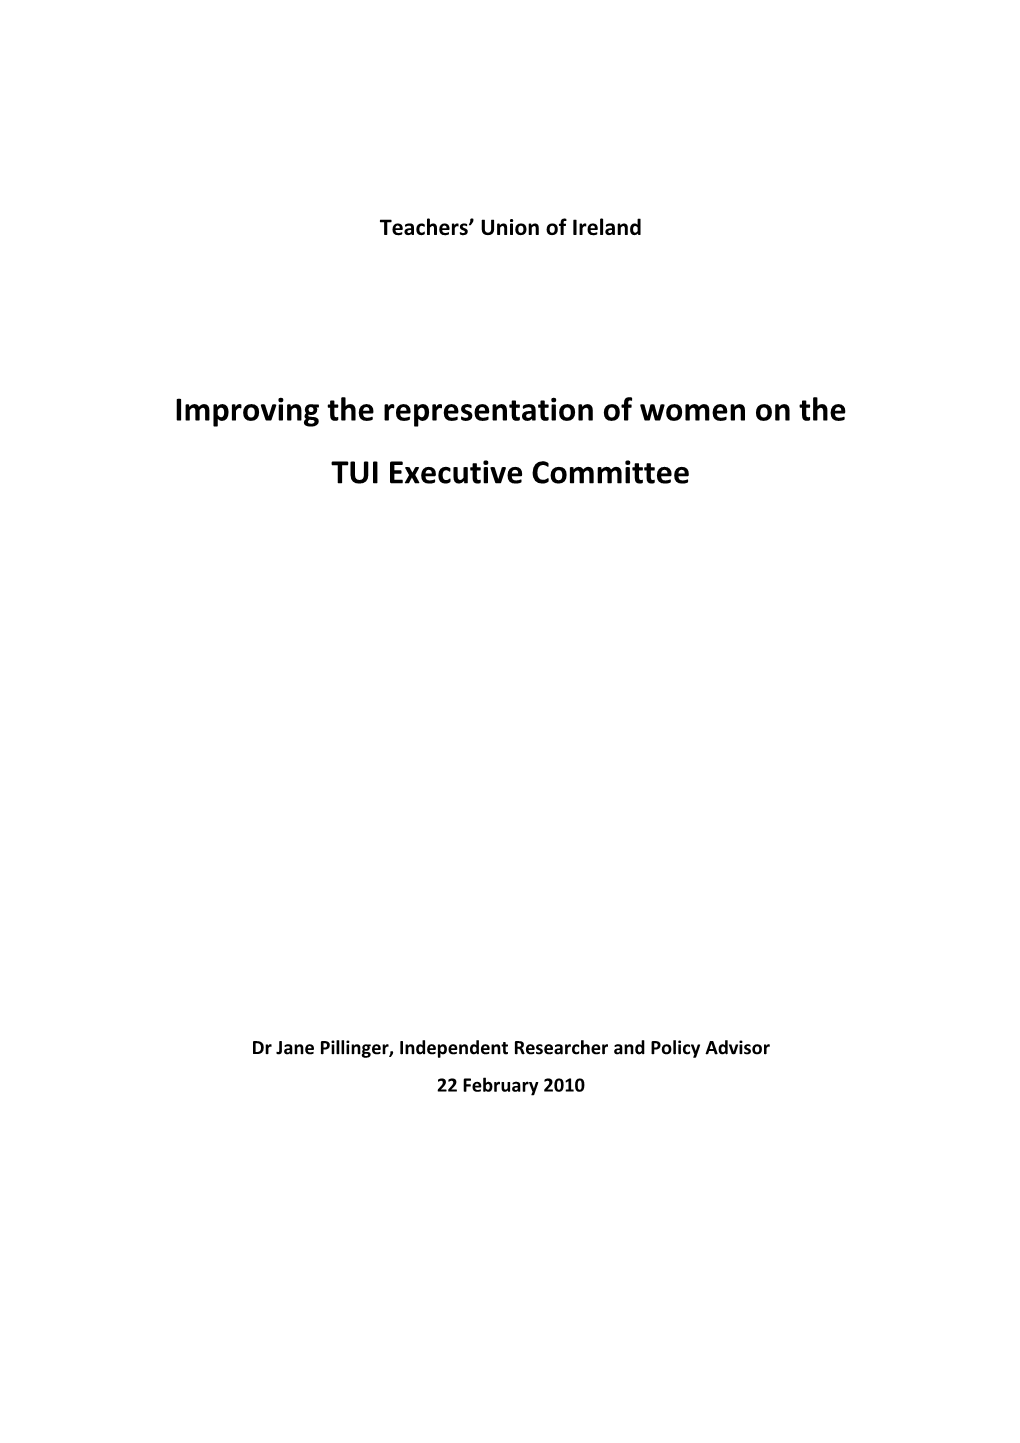 Improving the Representation of Women on the TUI Executive